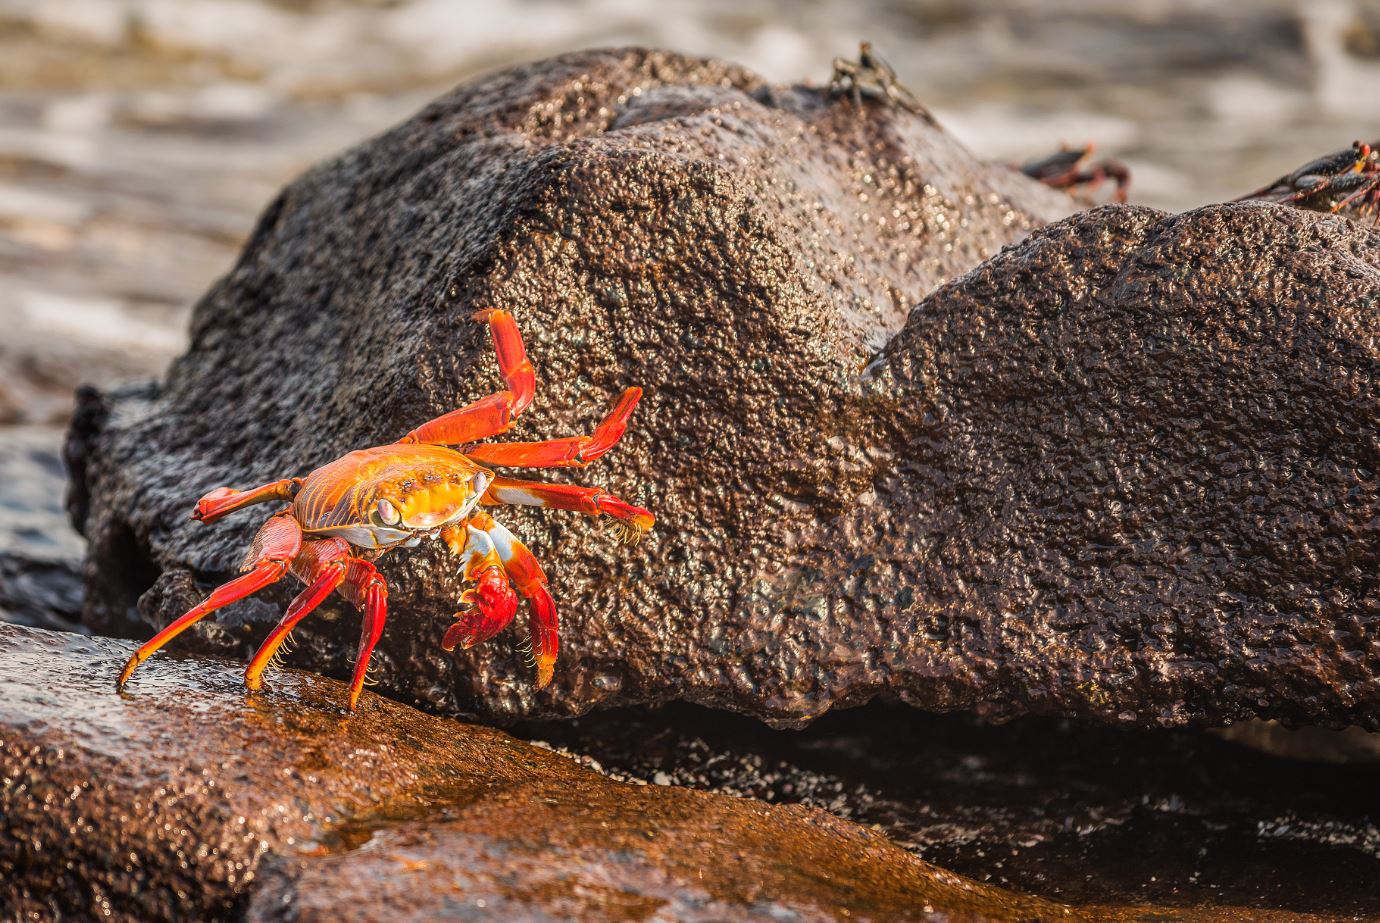 Sally lightfoot crab moving in between rocks.